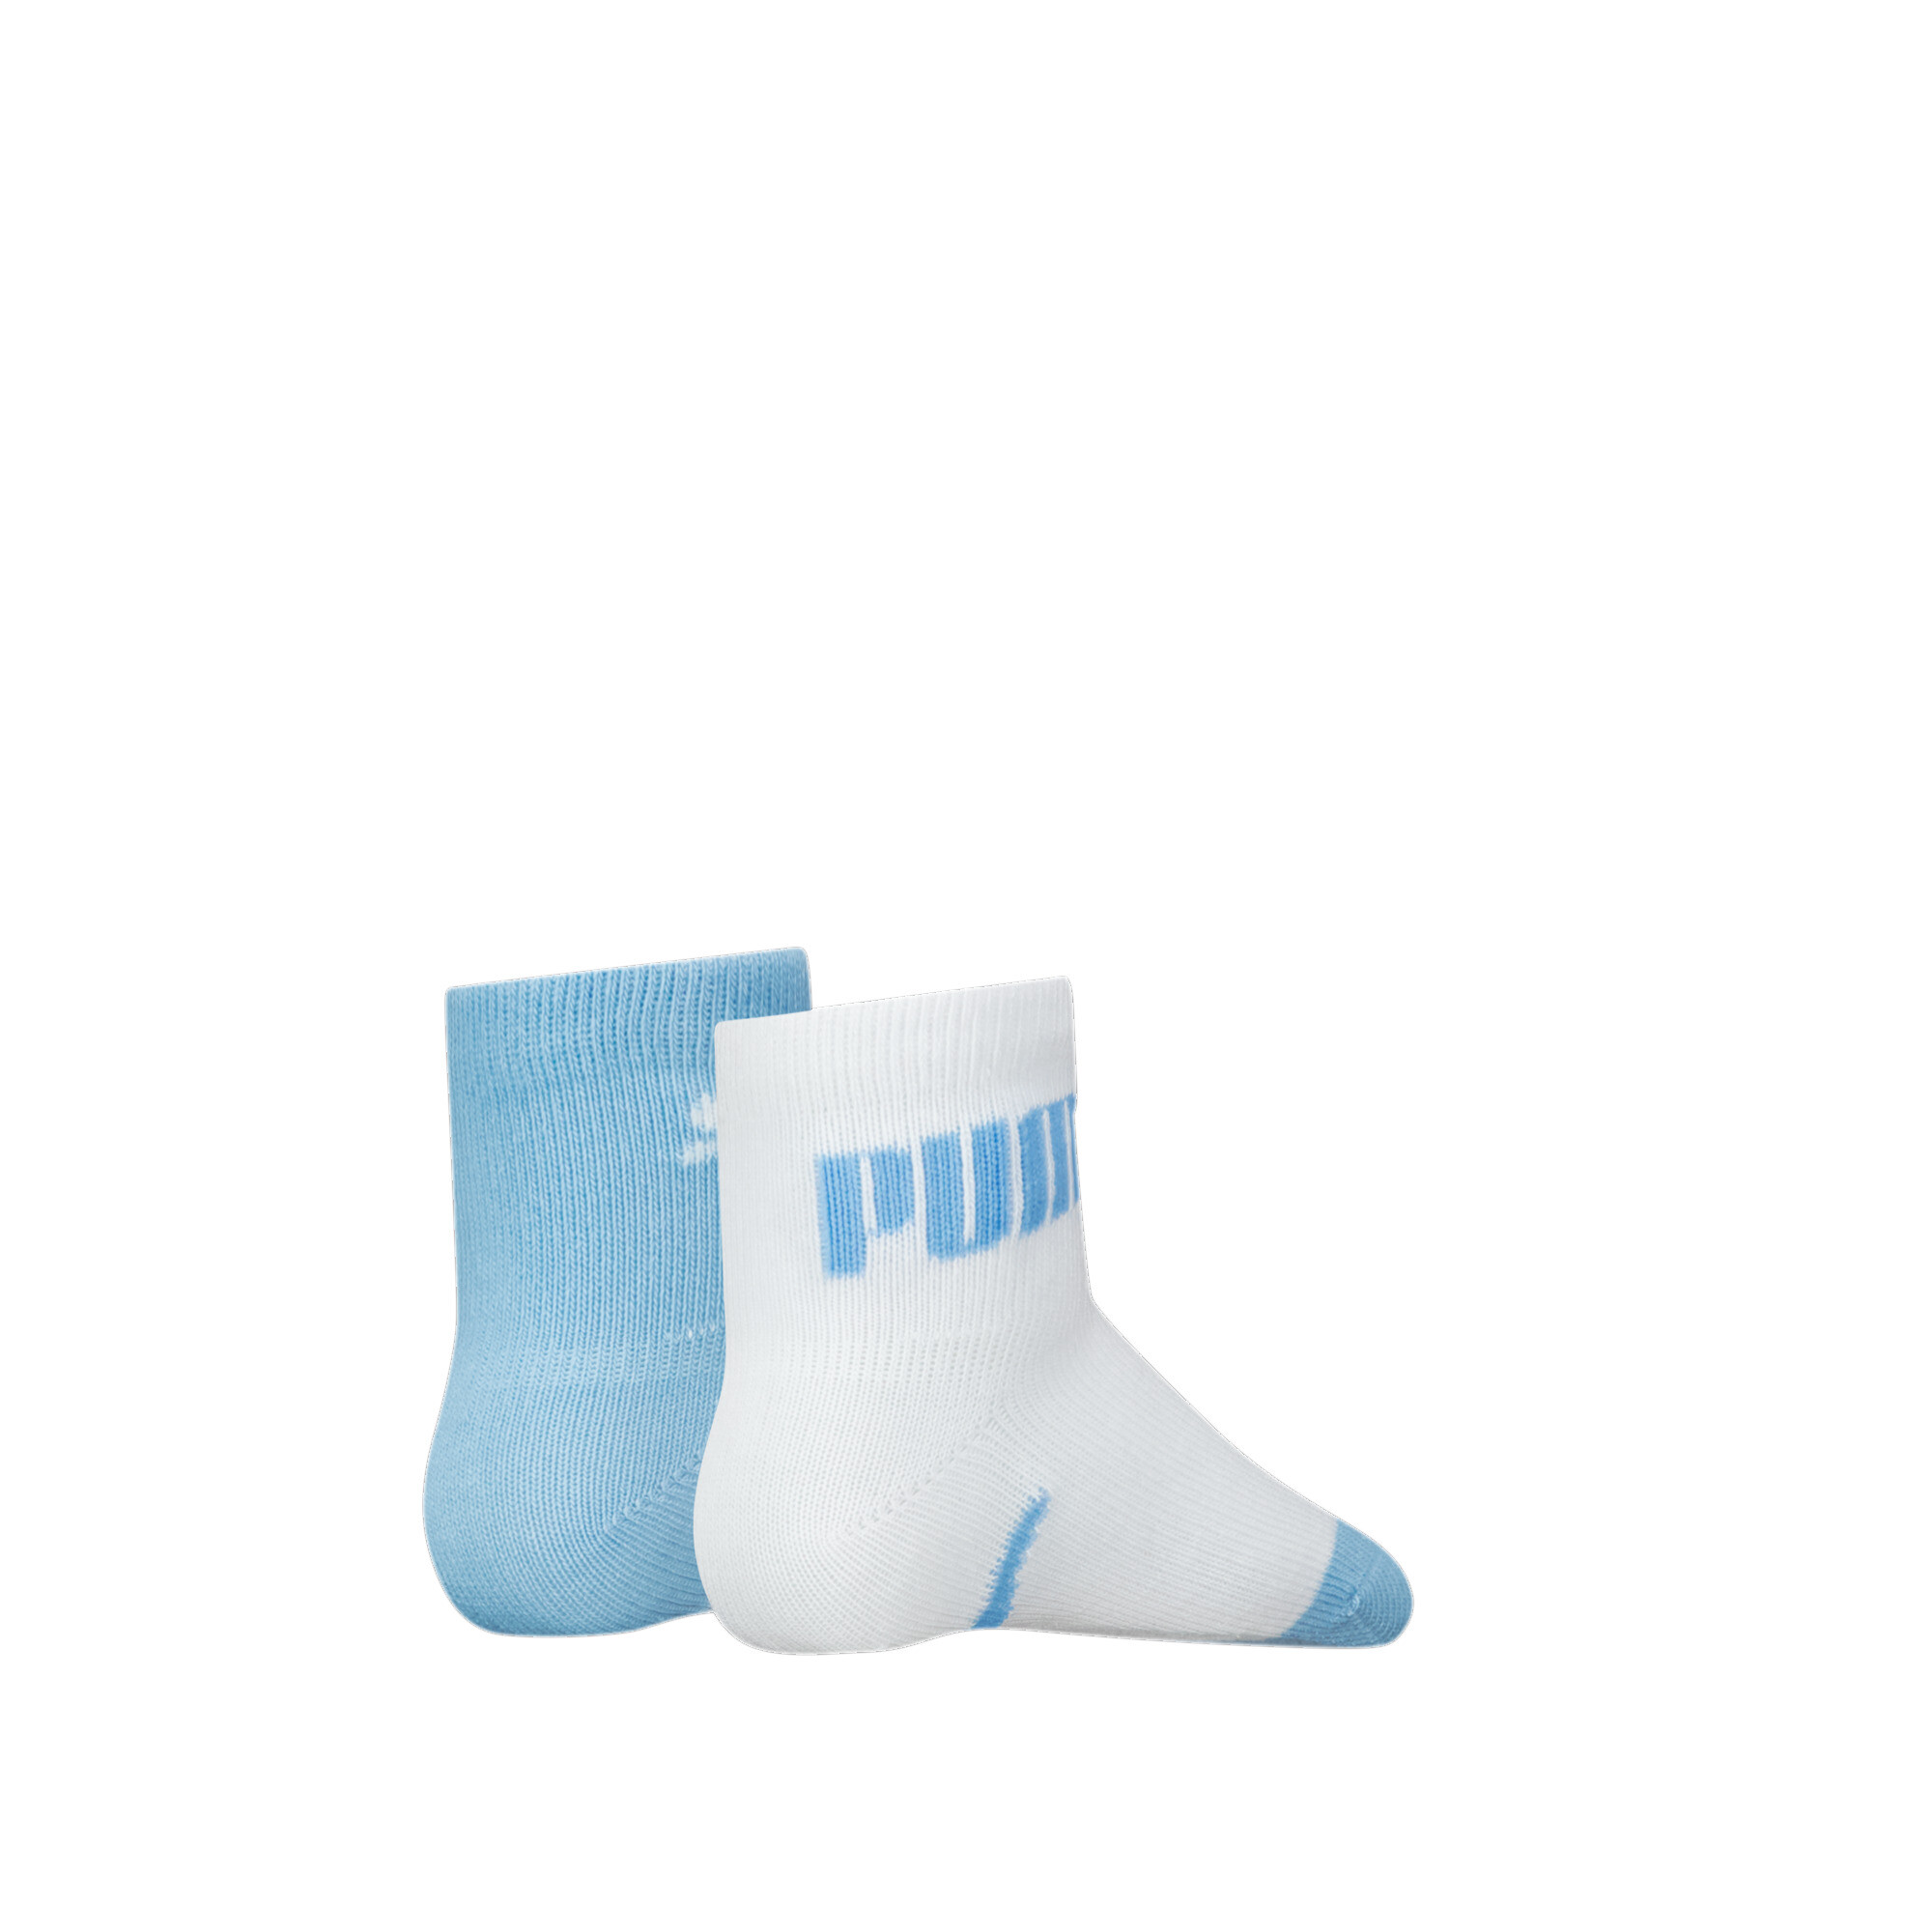 Puma Baby Classic Socks 2 Pack, Blue, Size 15-18, Age